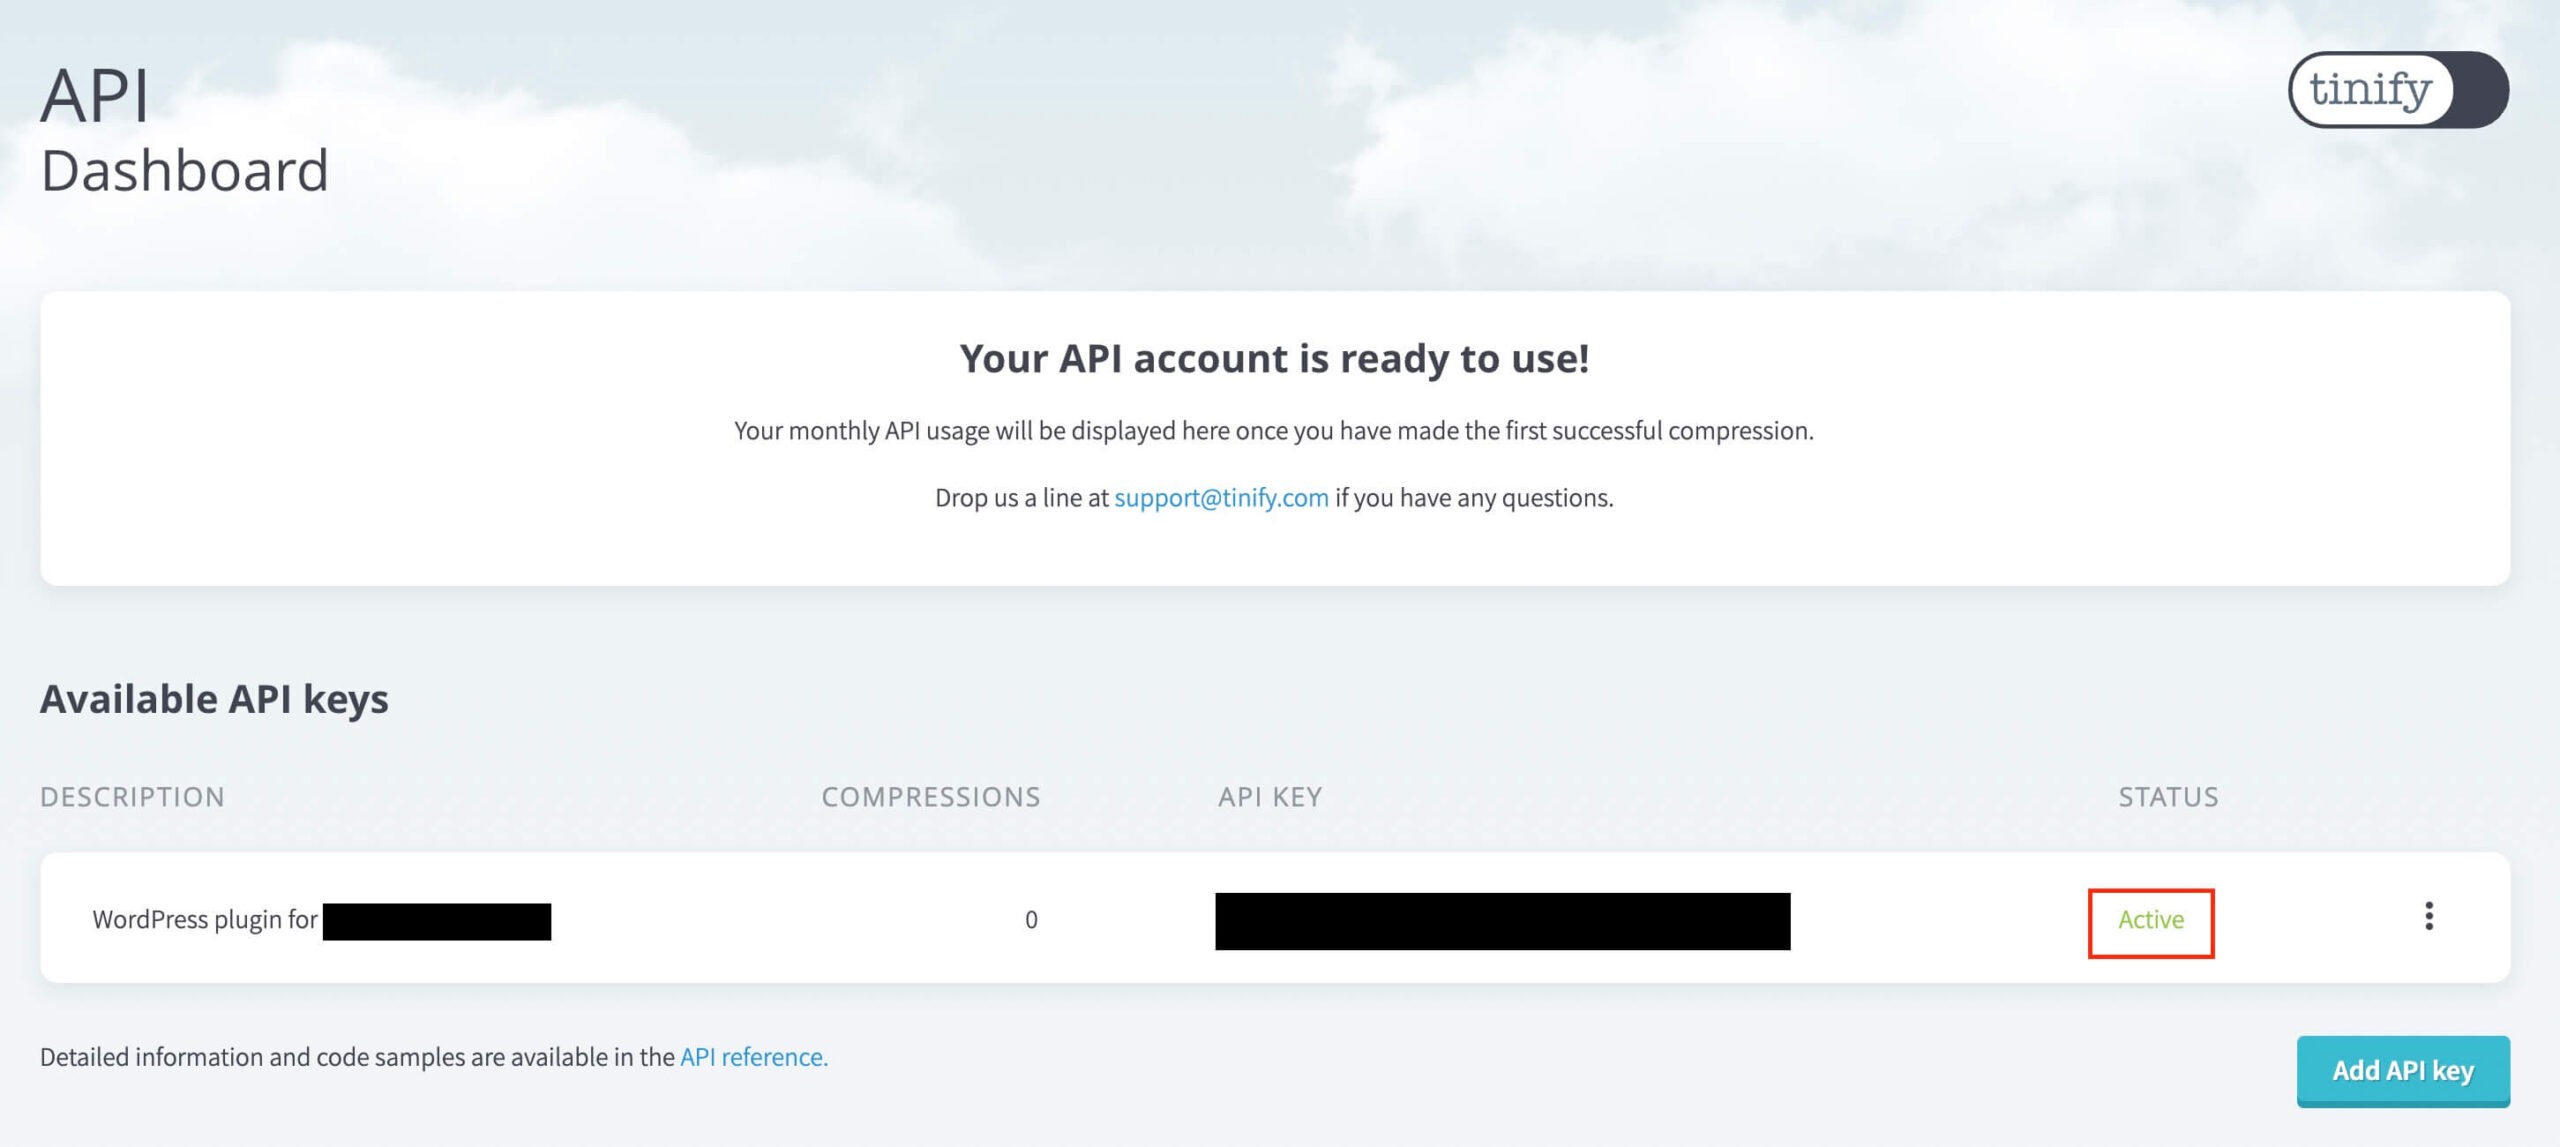 API Dashboard：Enable keyをクリック後